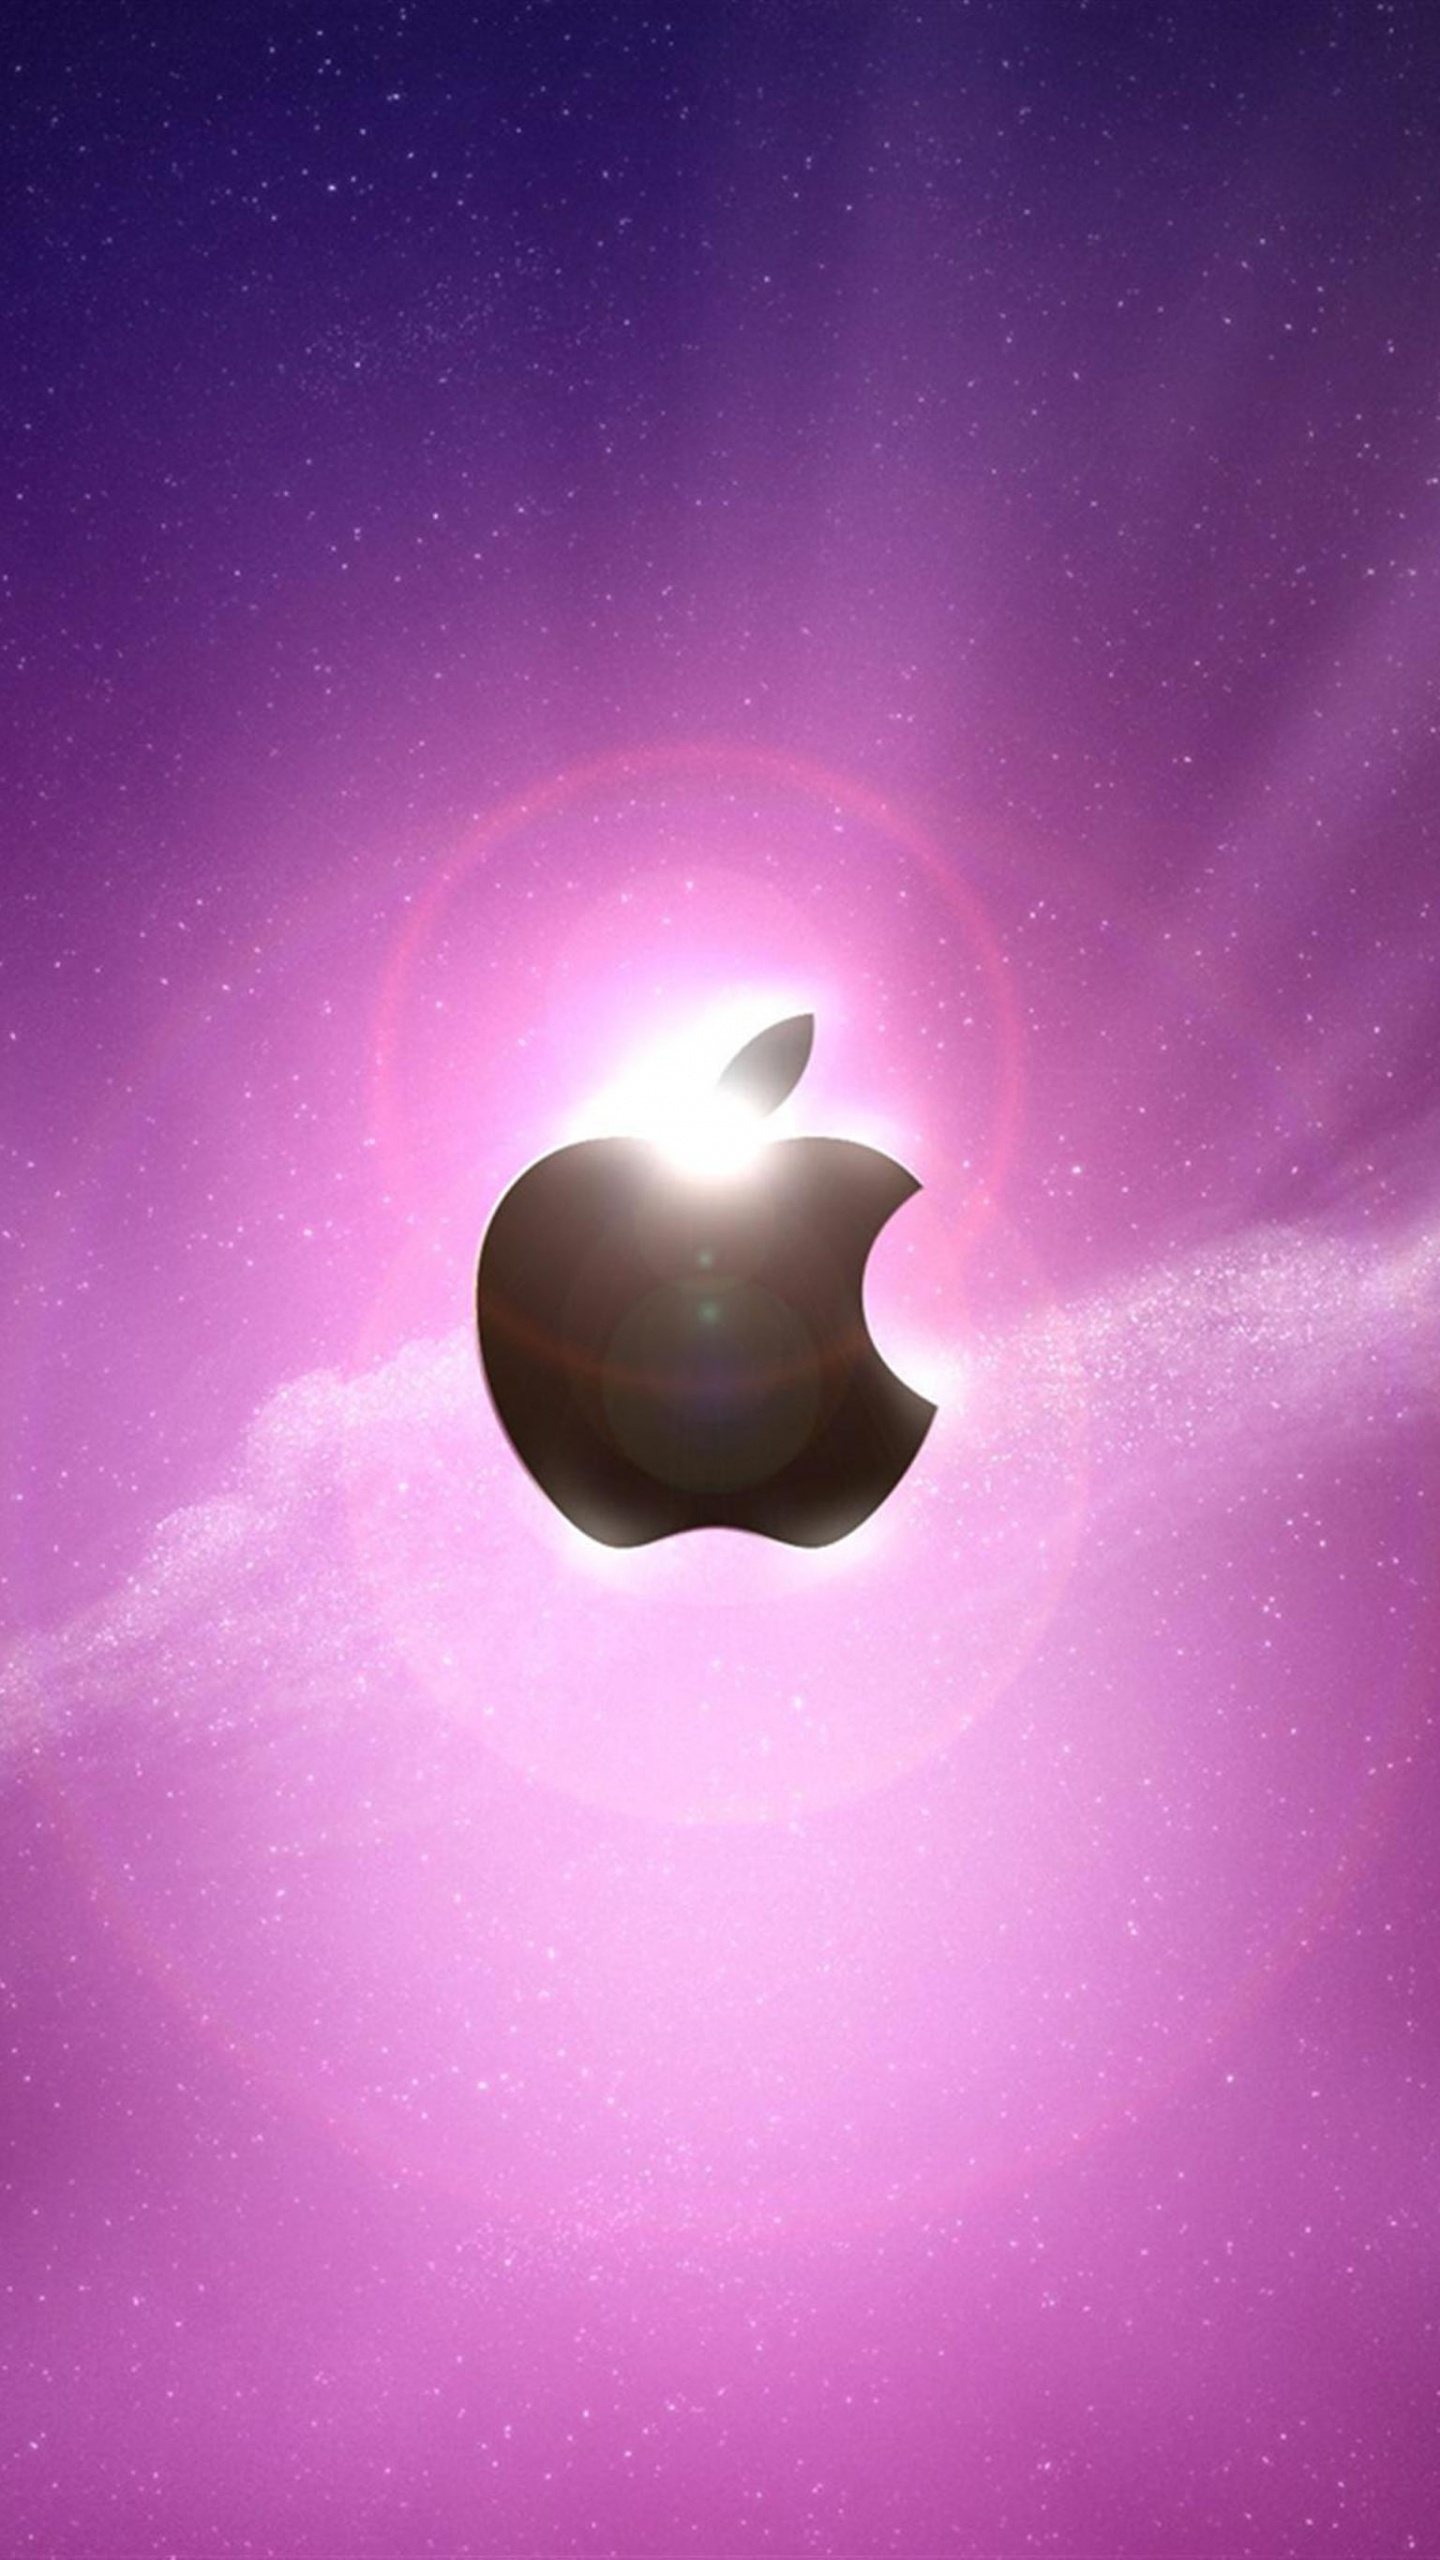 Apple, 苹果它, 紫色的, 紫罗兰色, 气氛 壁纸 1440x2560 允许